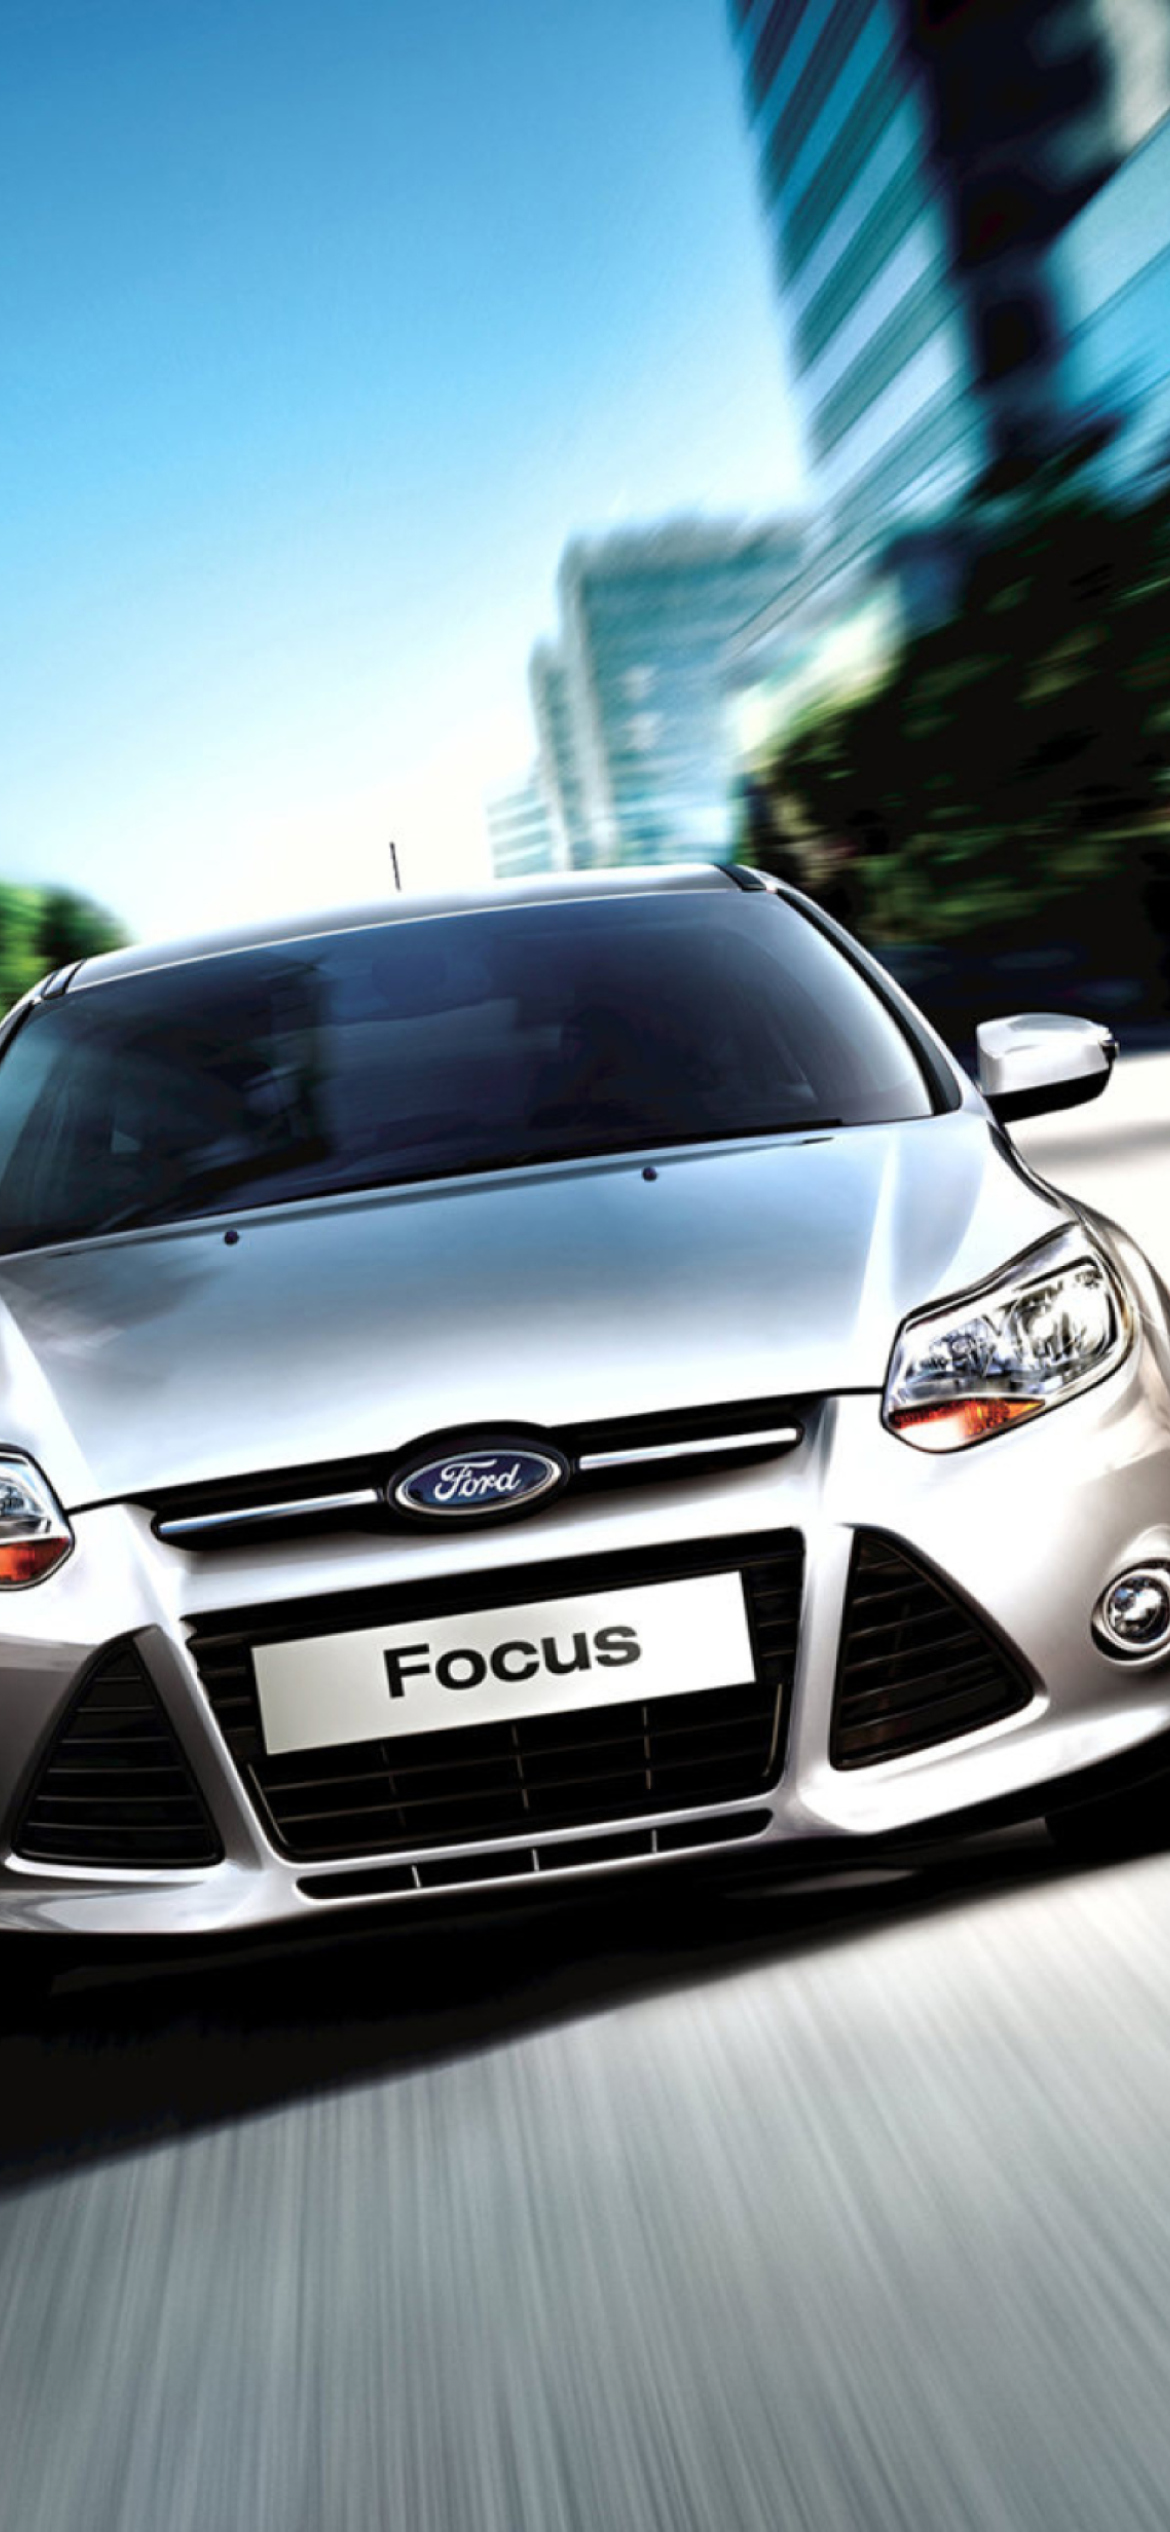 Auto Ford Focus - Fondos de pantalla gratis para iPhone 12 Pro